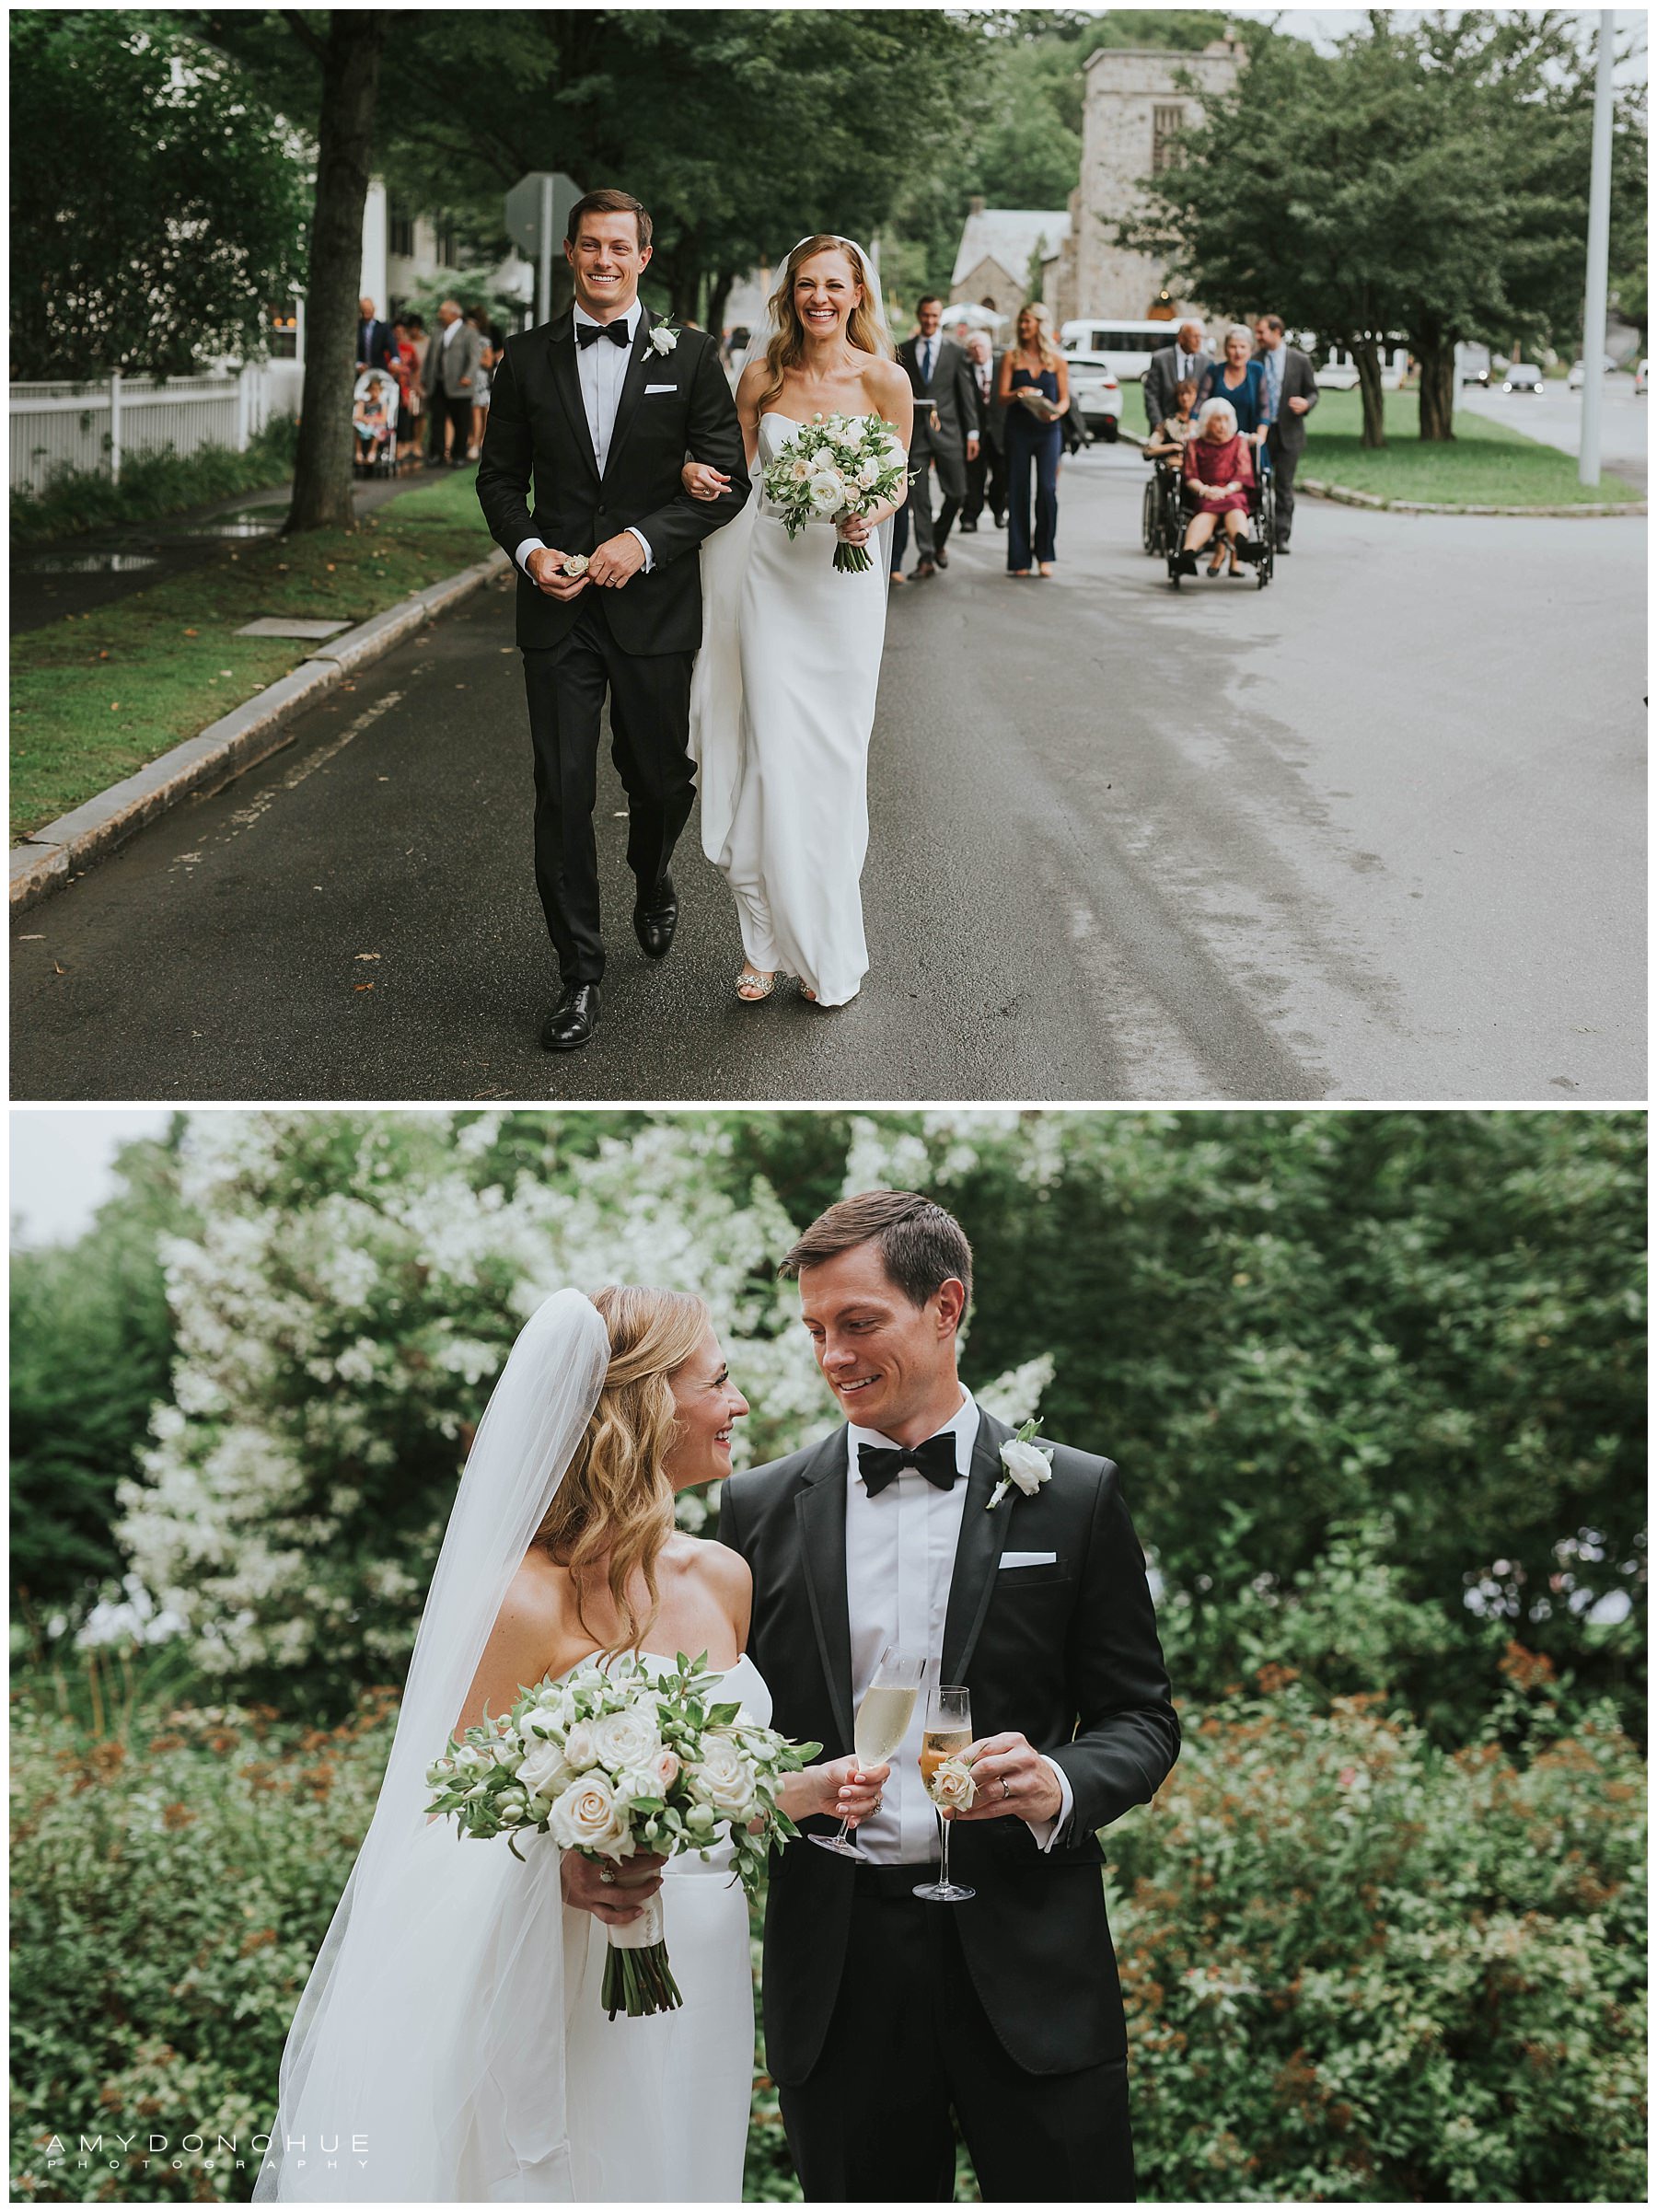 Post Ceremony Celebration | © Amy Donohue Photography | Woodstock, Vermont Wedding Photographer